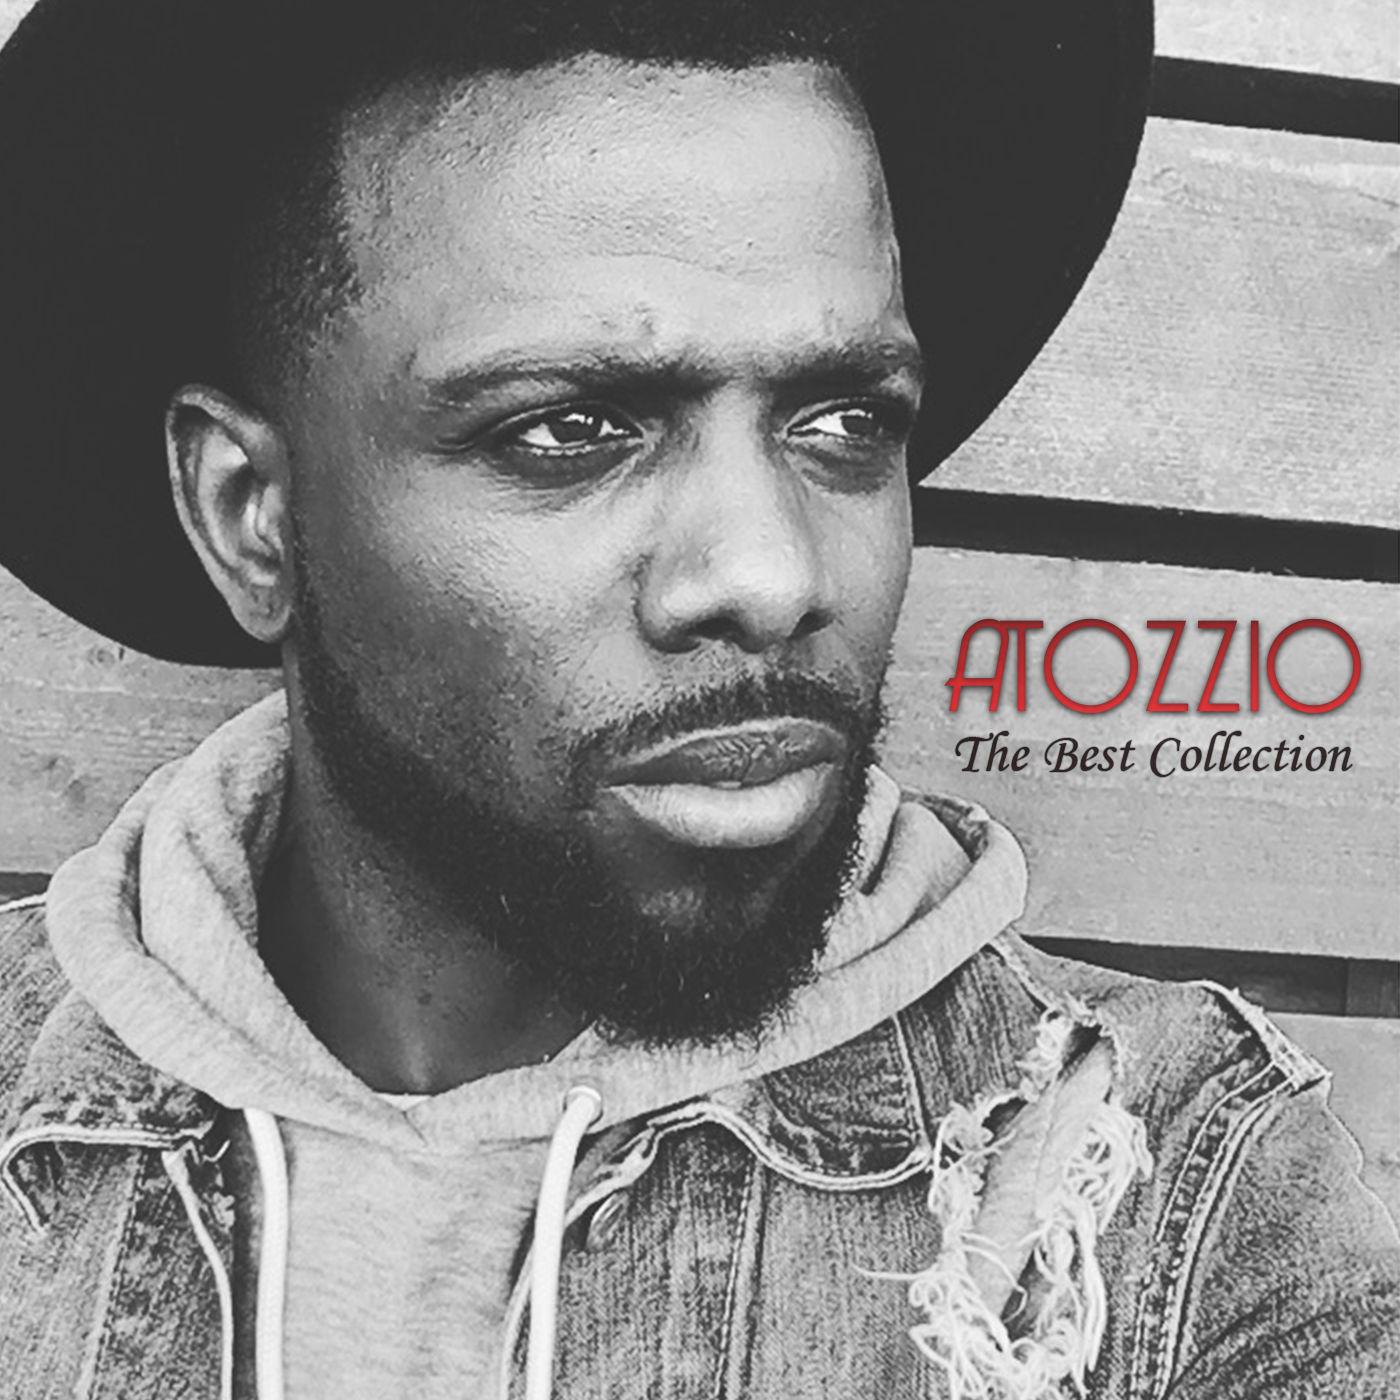 Atozzio - Pride Of A Man